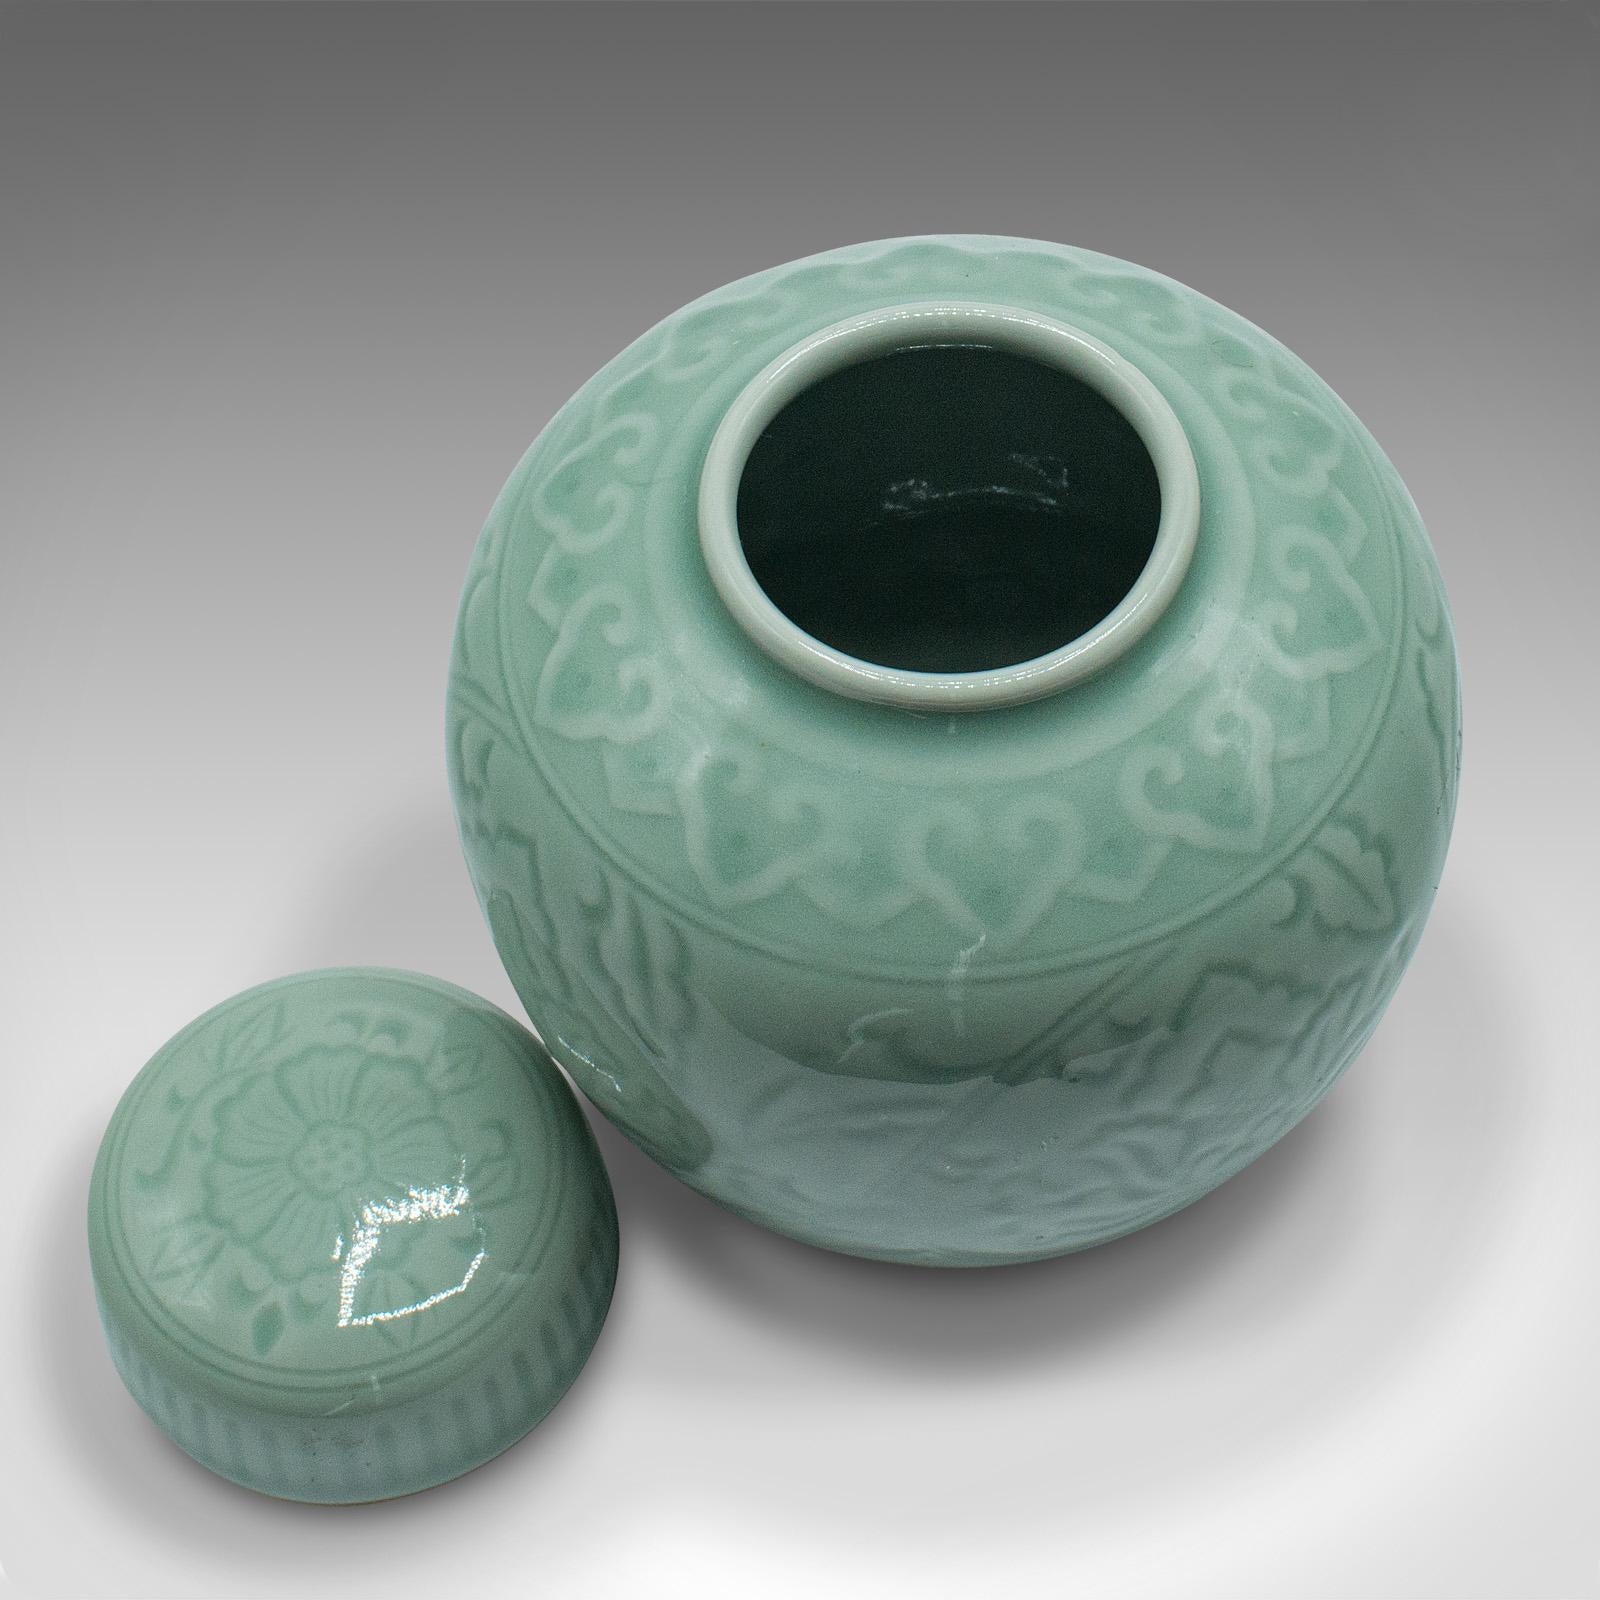 Pair Of Antique Decorative Spice Jars, Chinese, Celadon, Ceramic Pot, Victorian For Sale 2